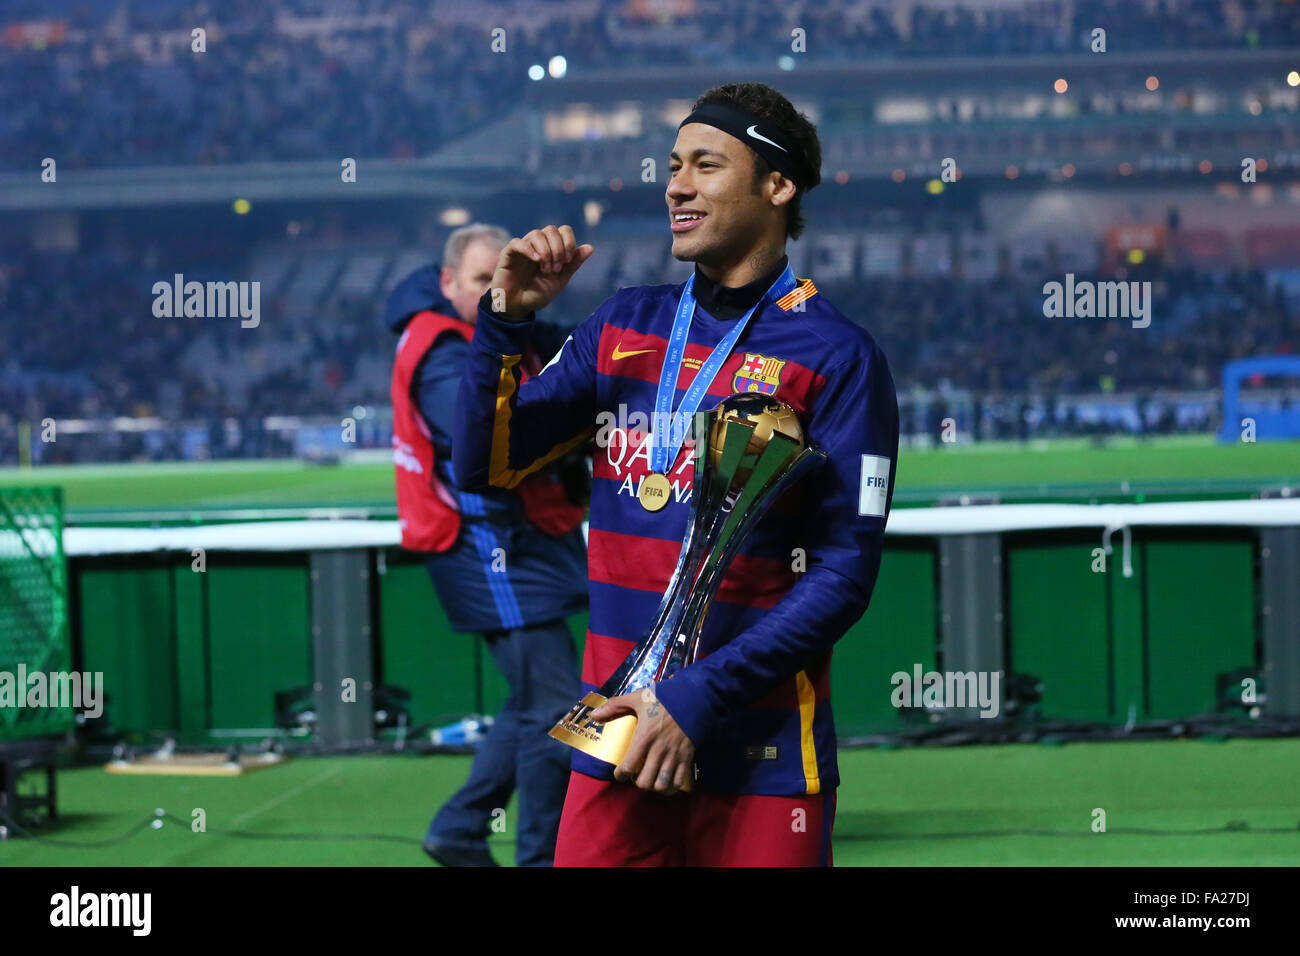 Neymar (Barcelona), 20. Dezember 2015 - Fußball / Fußball: FIFA Club World Cup Japan 2015 Award Ceremony am Yokohama International Stadium in Kanagawa, Japan. (Foto von Yohei Osada/AFLO SPORT) Stockfoto